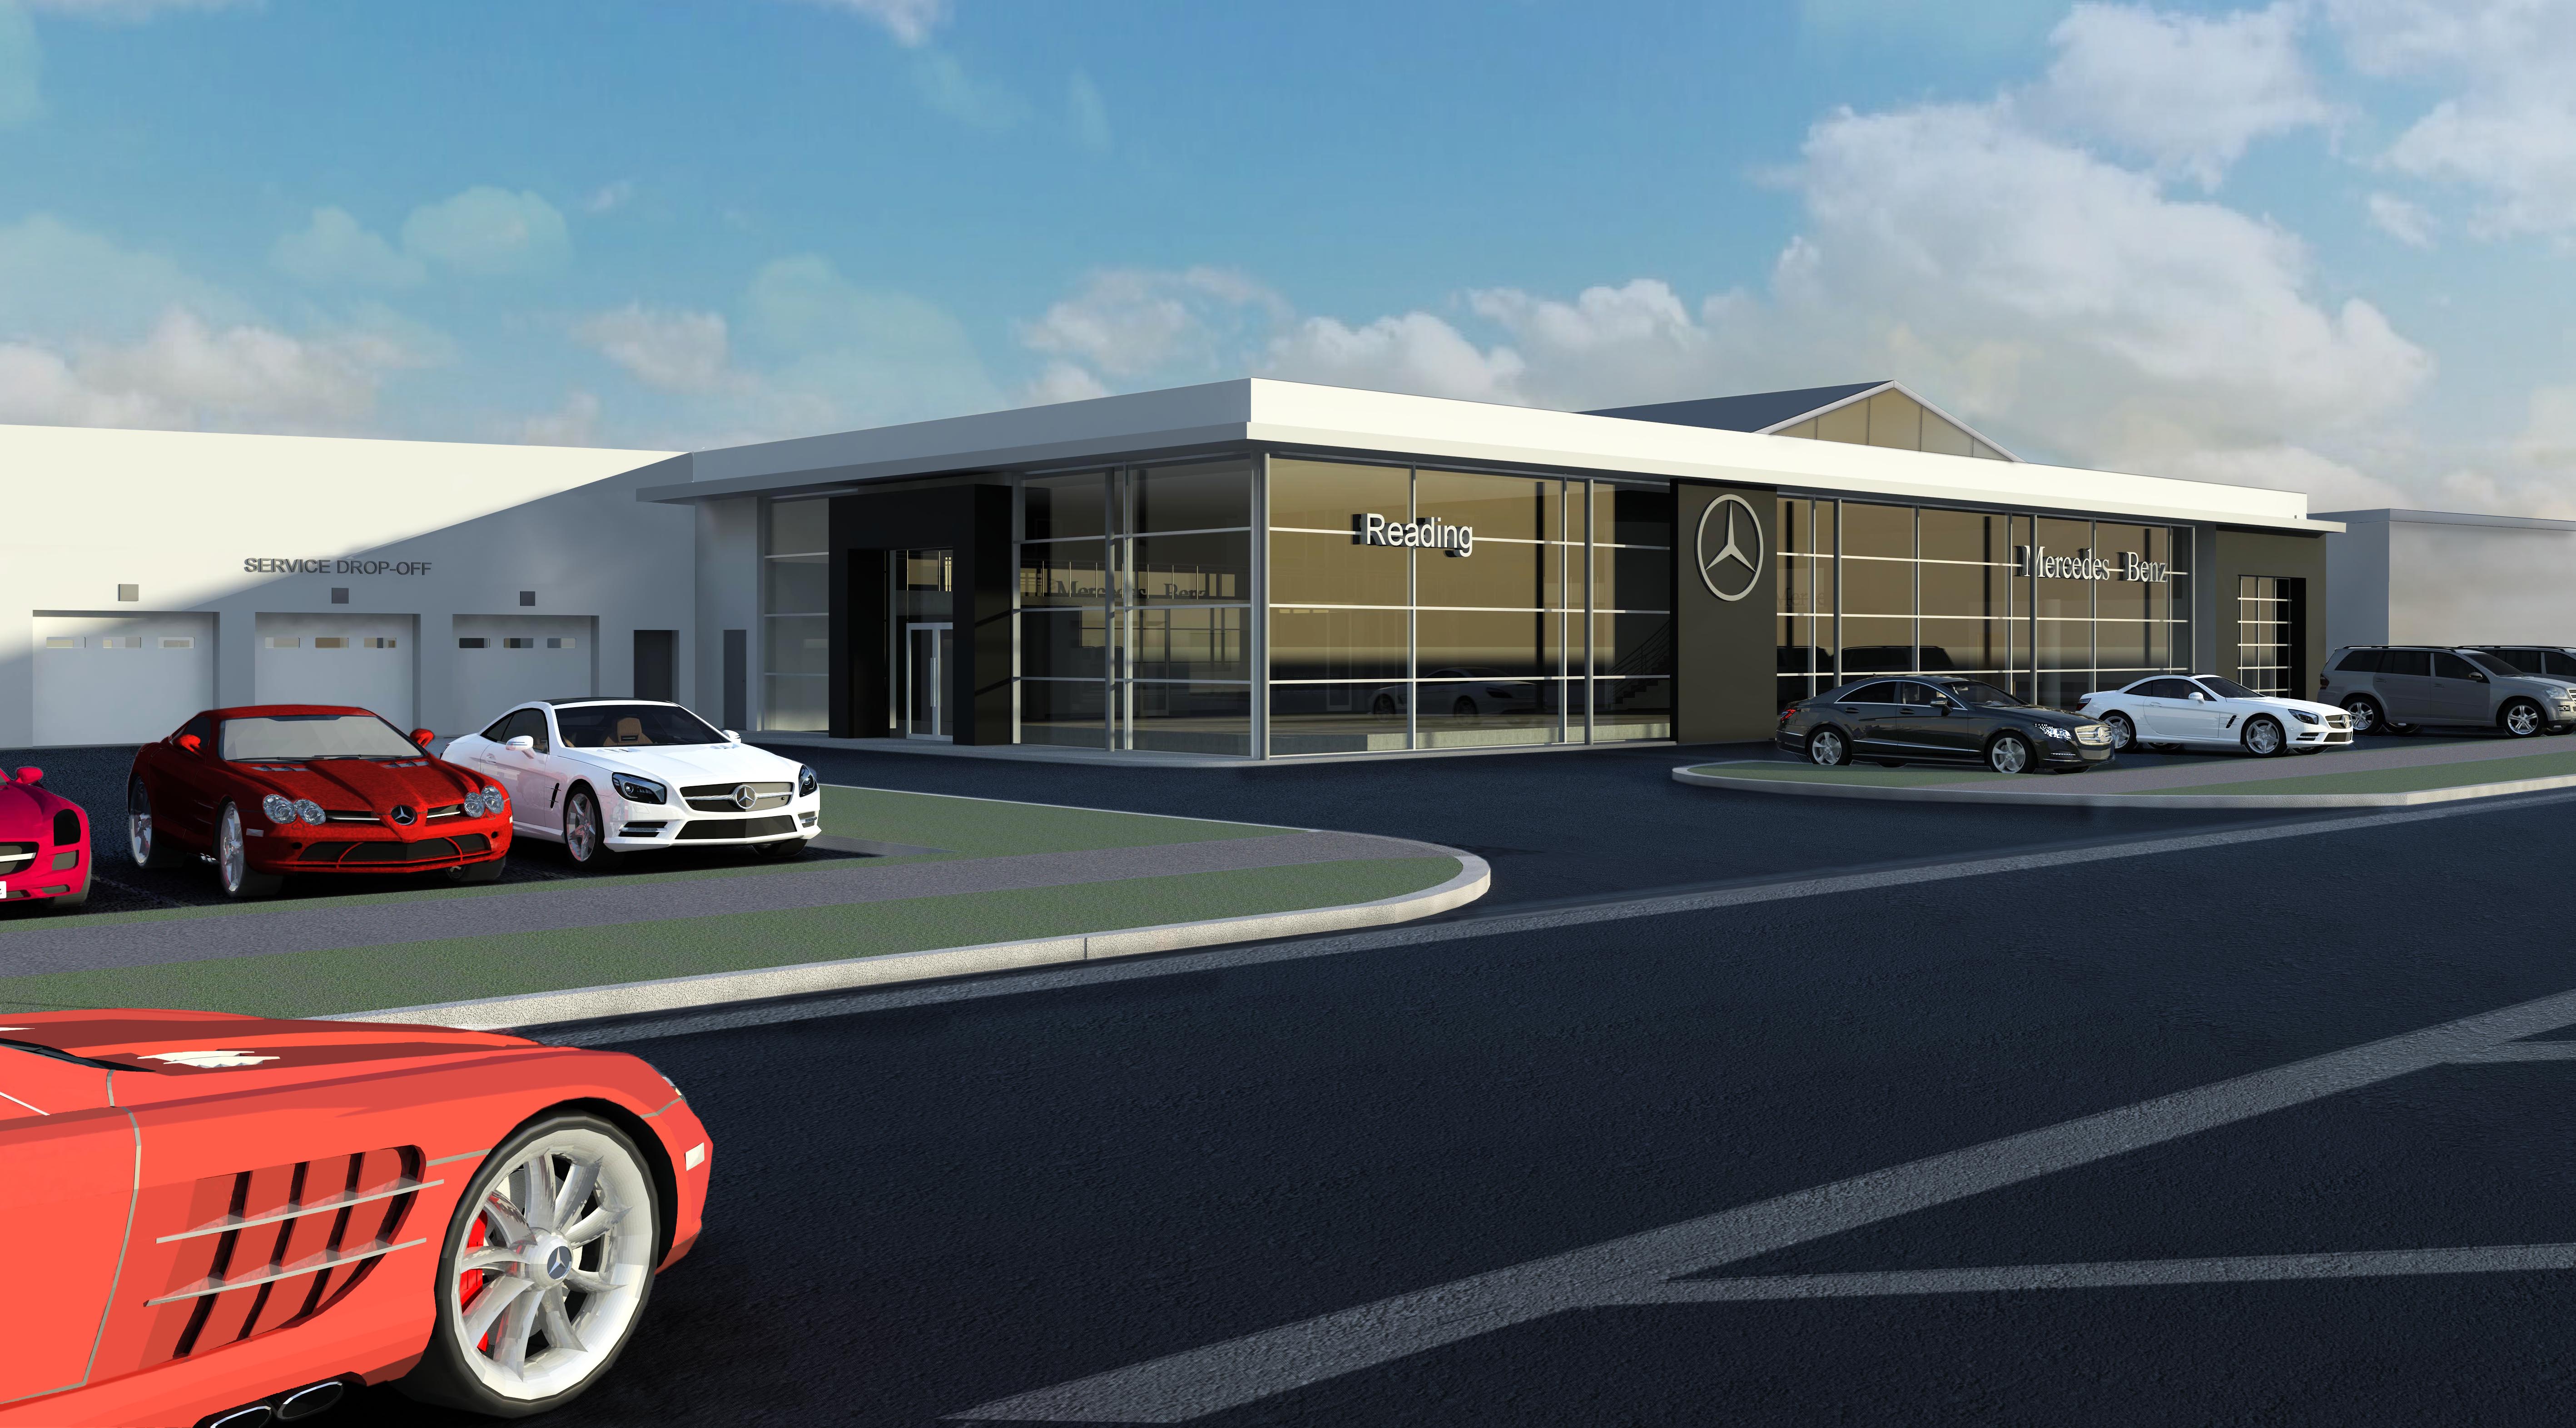 Vertu Motors invests �4.7 million in Mercedes-Benz Reading 